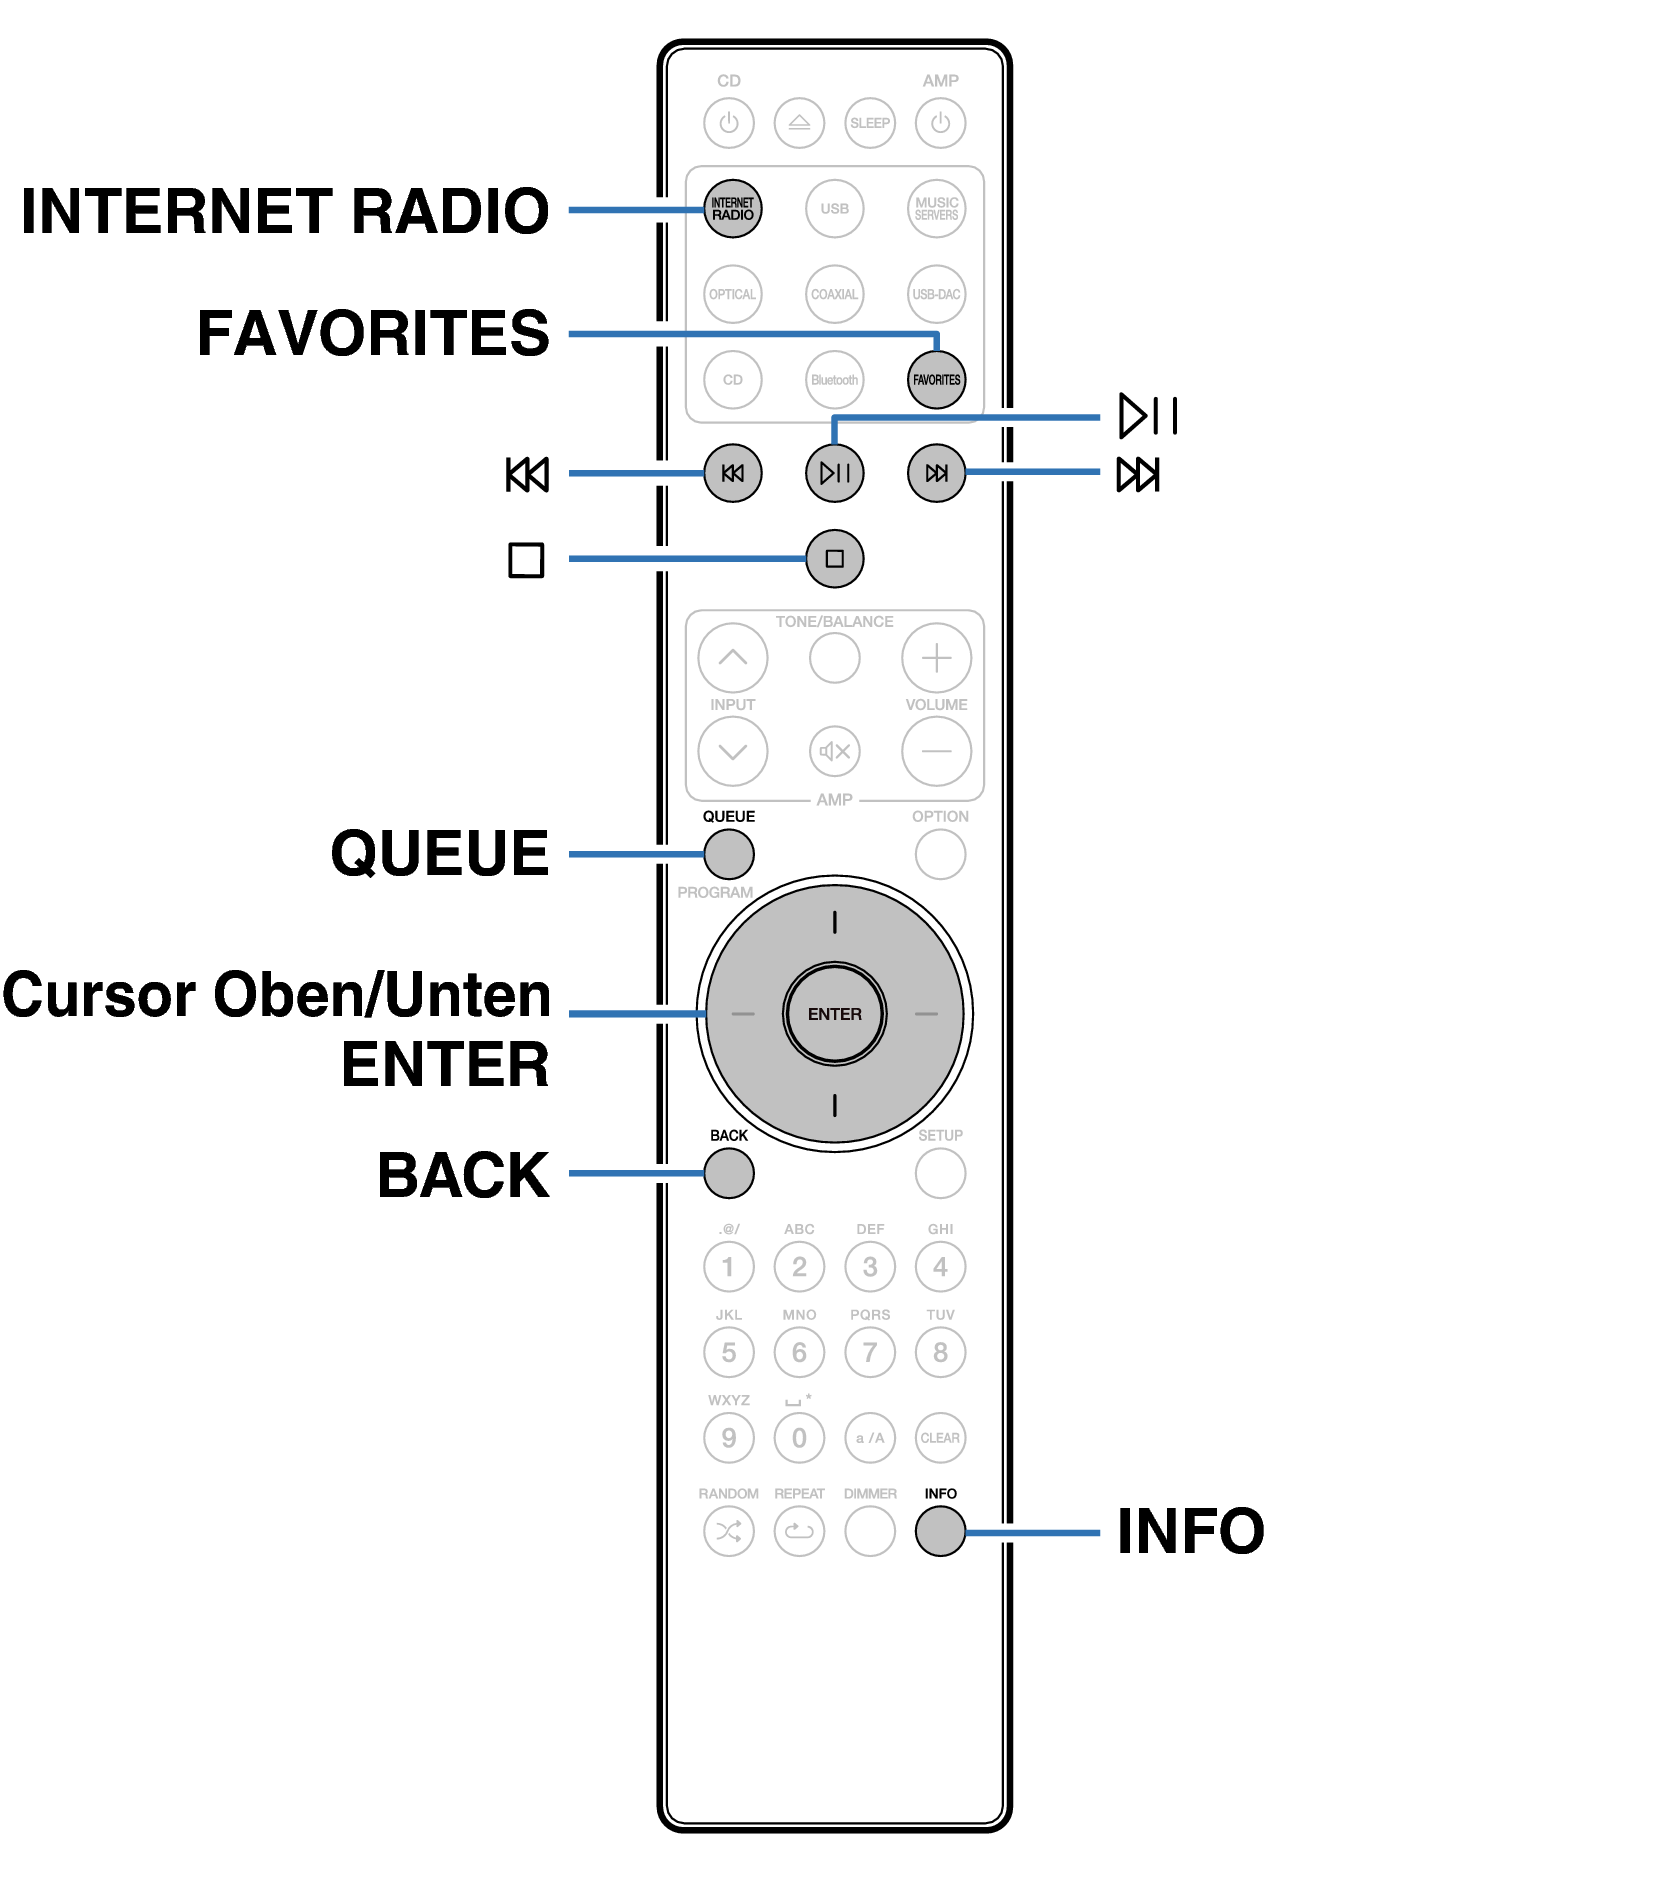 Ope Internet Radio RC002PMND